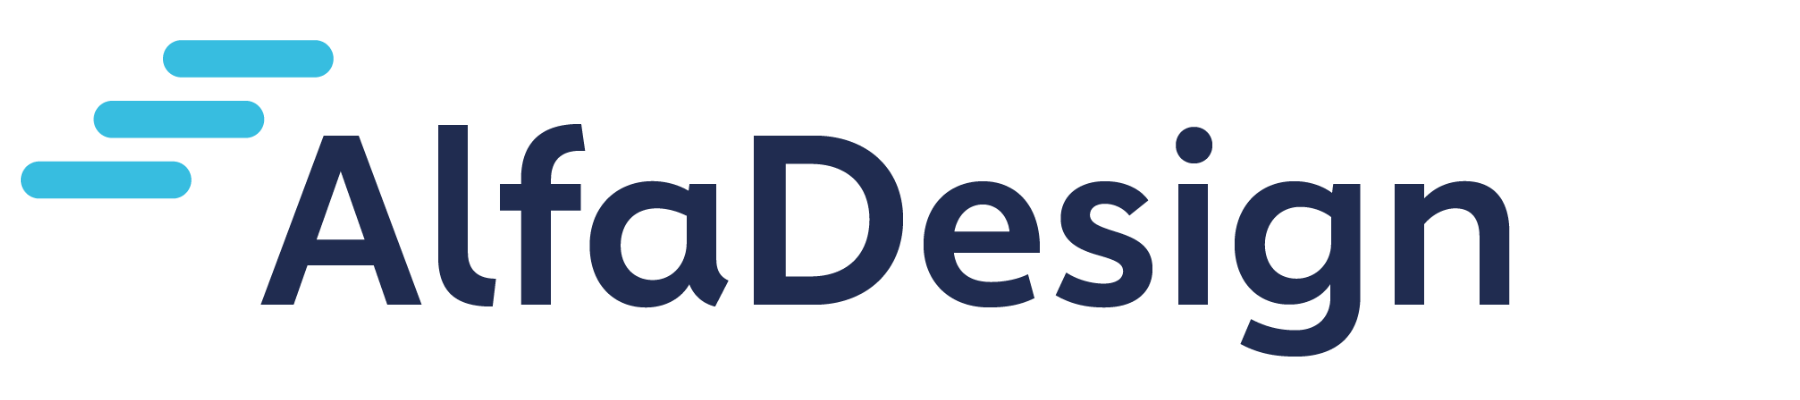 AlfaDesign logo